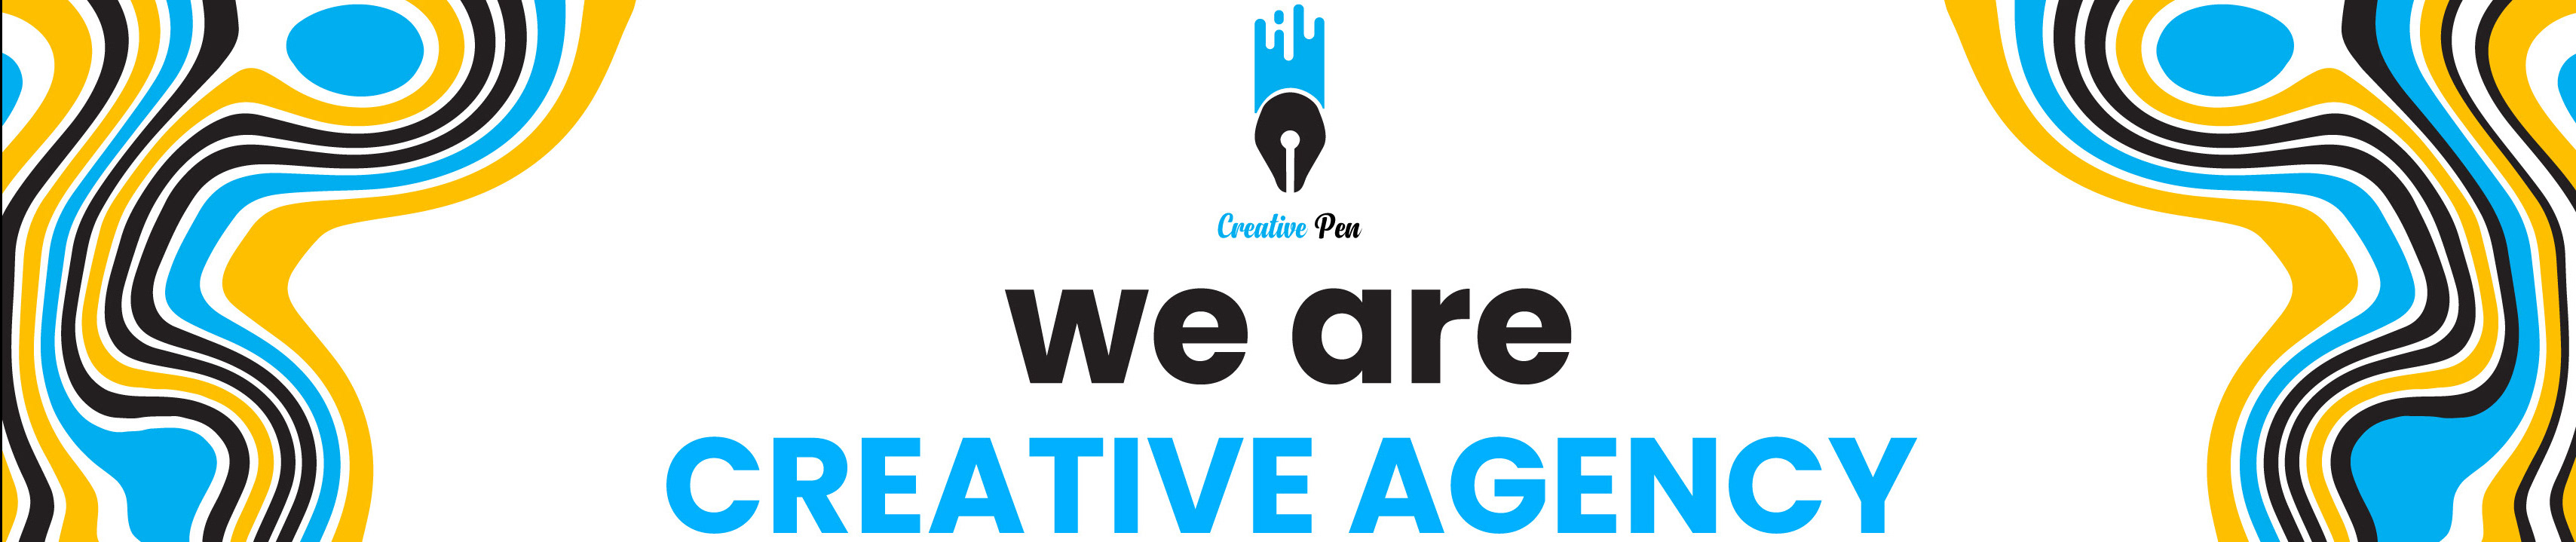 Creative Pen's profile banner